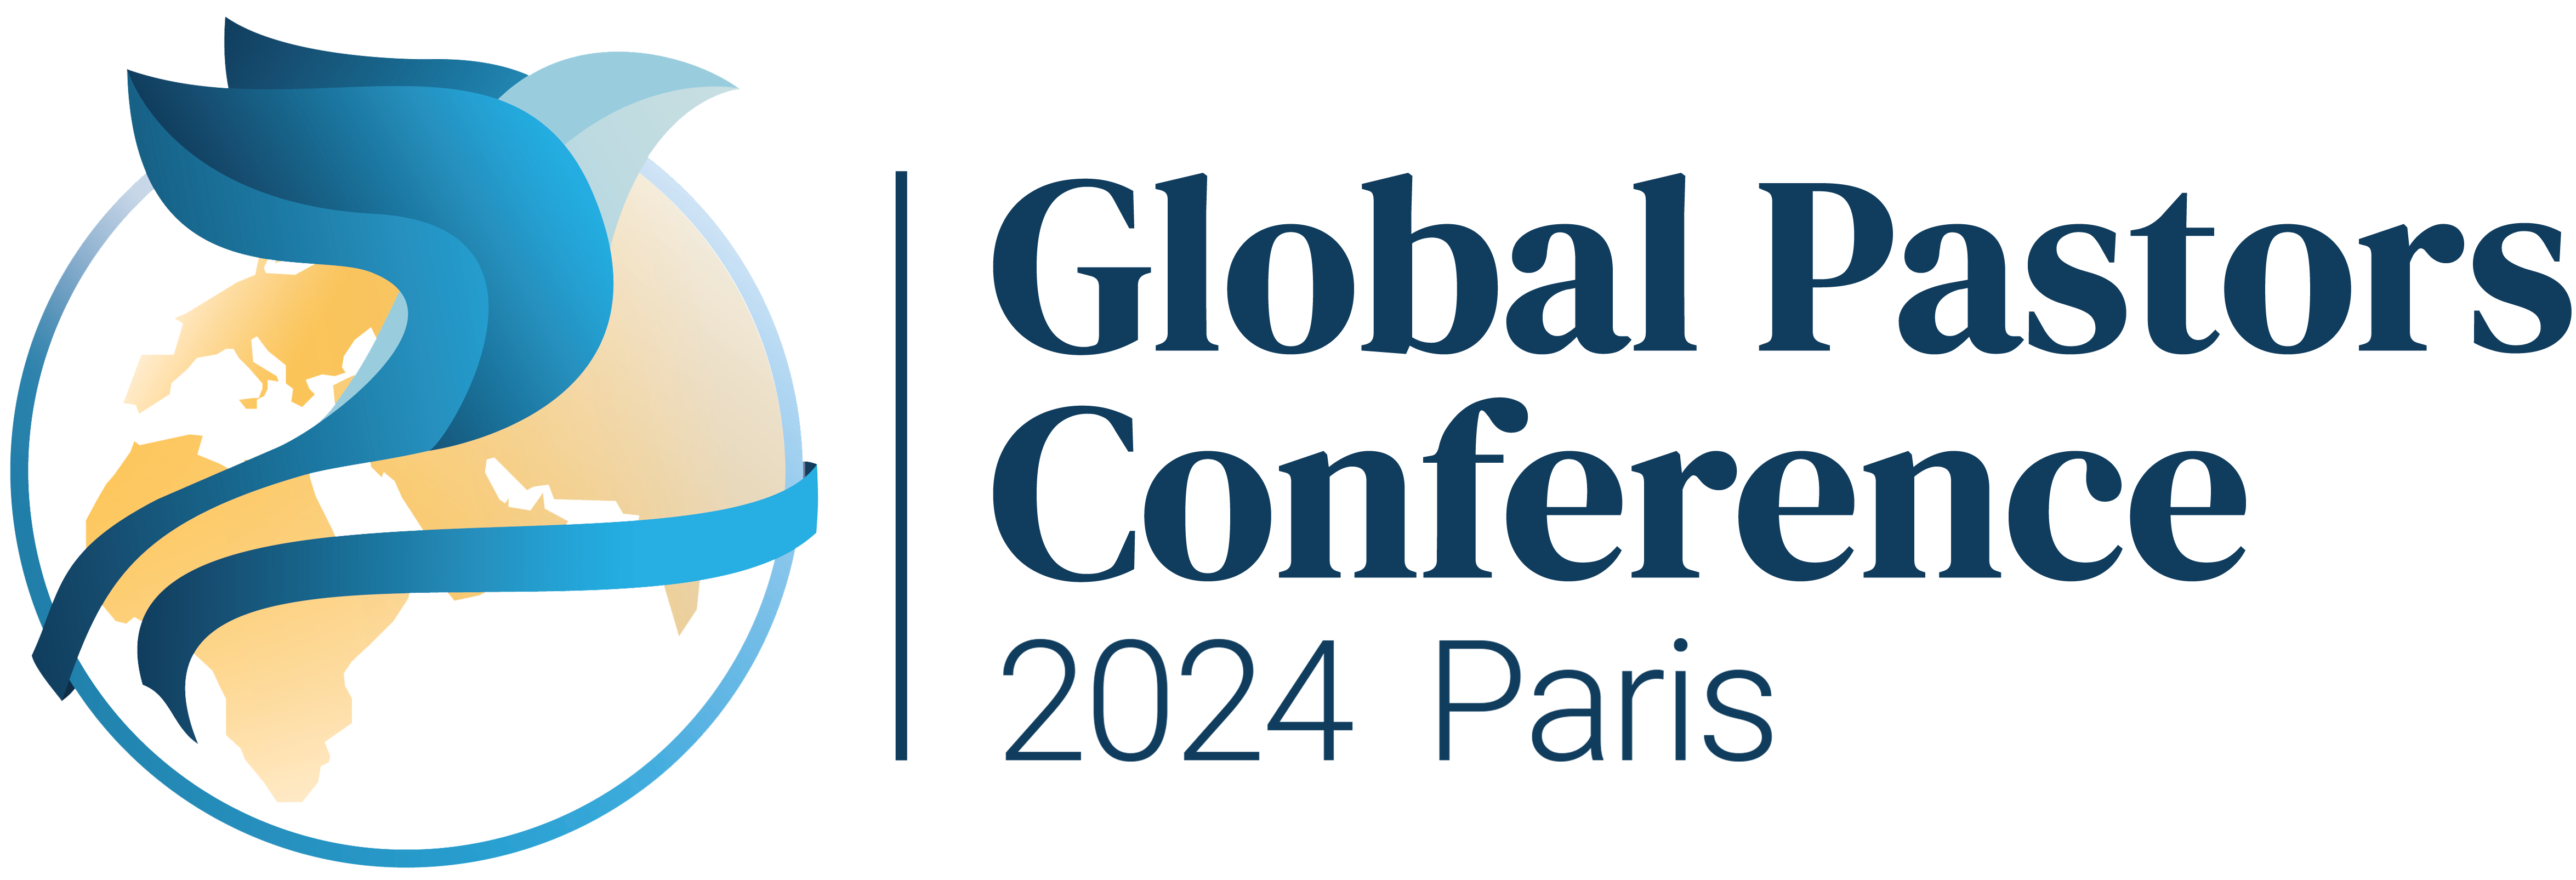 Global Pastors Conference Europe 2024